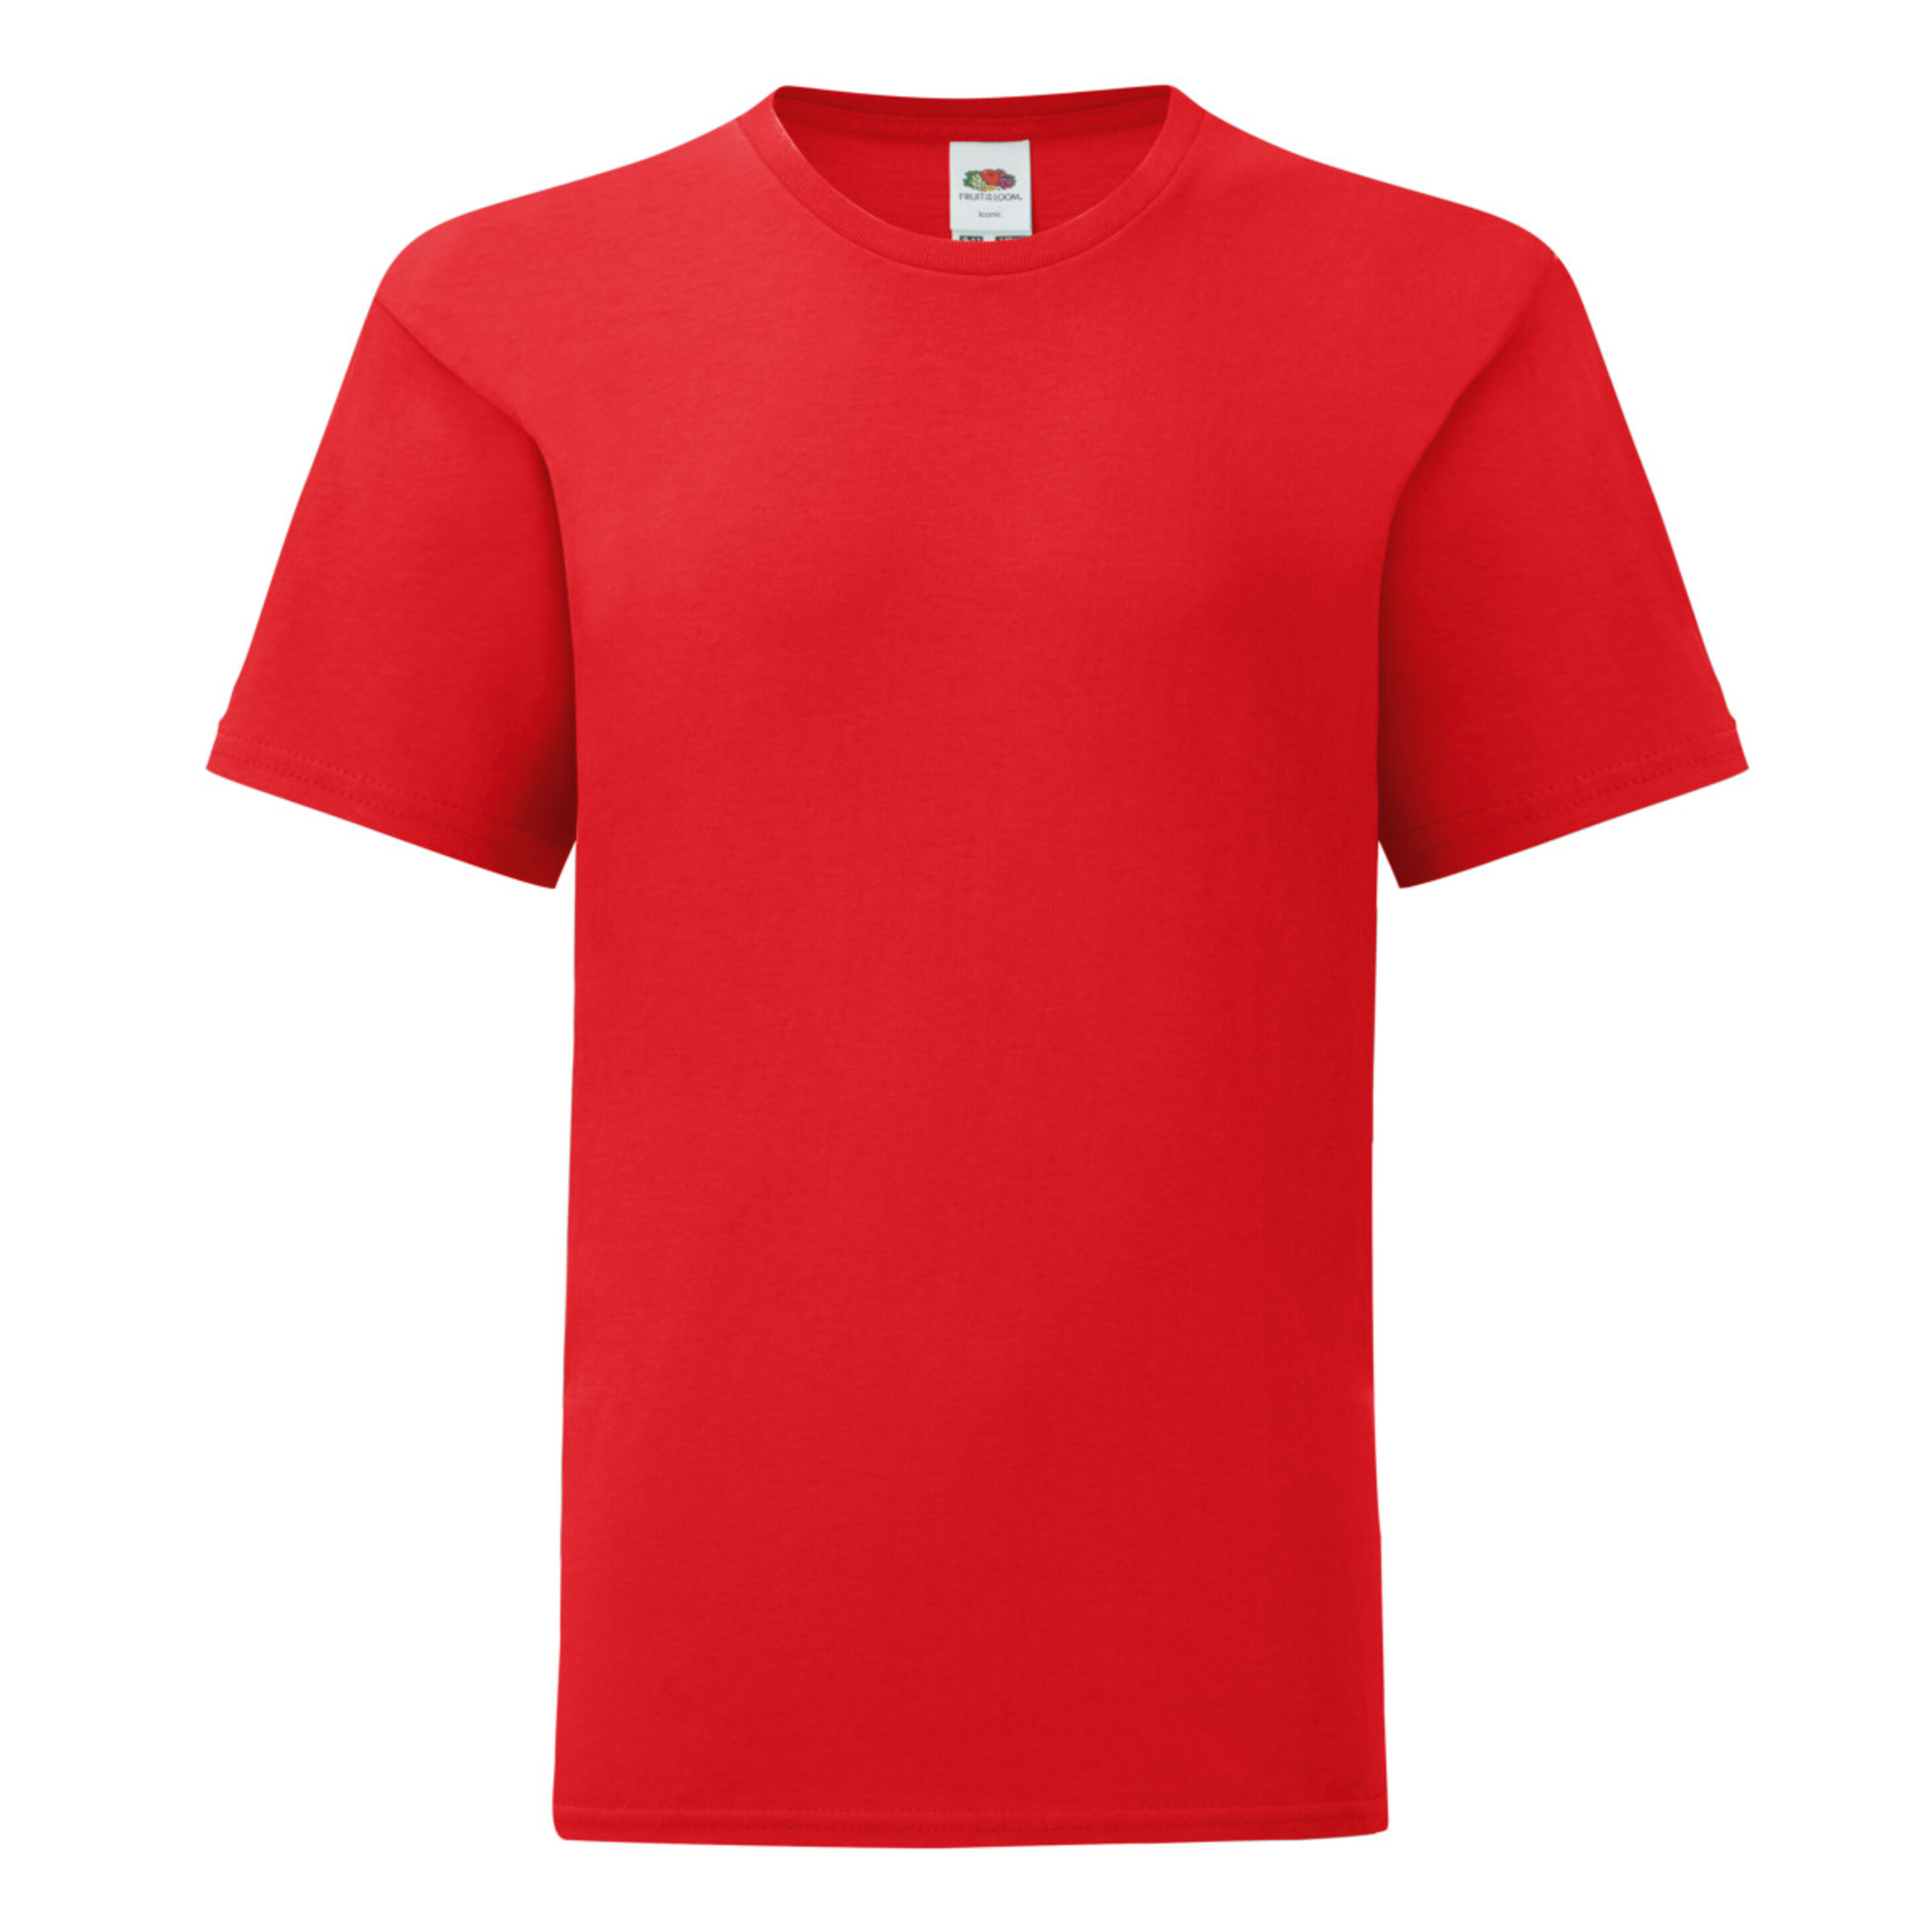 Camiseta Fruit Of The Loom Original - rojo - 